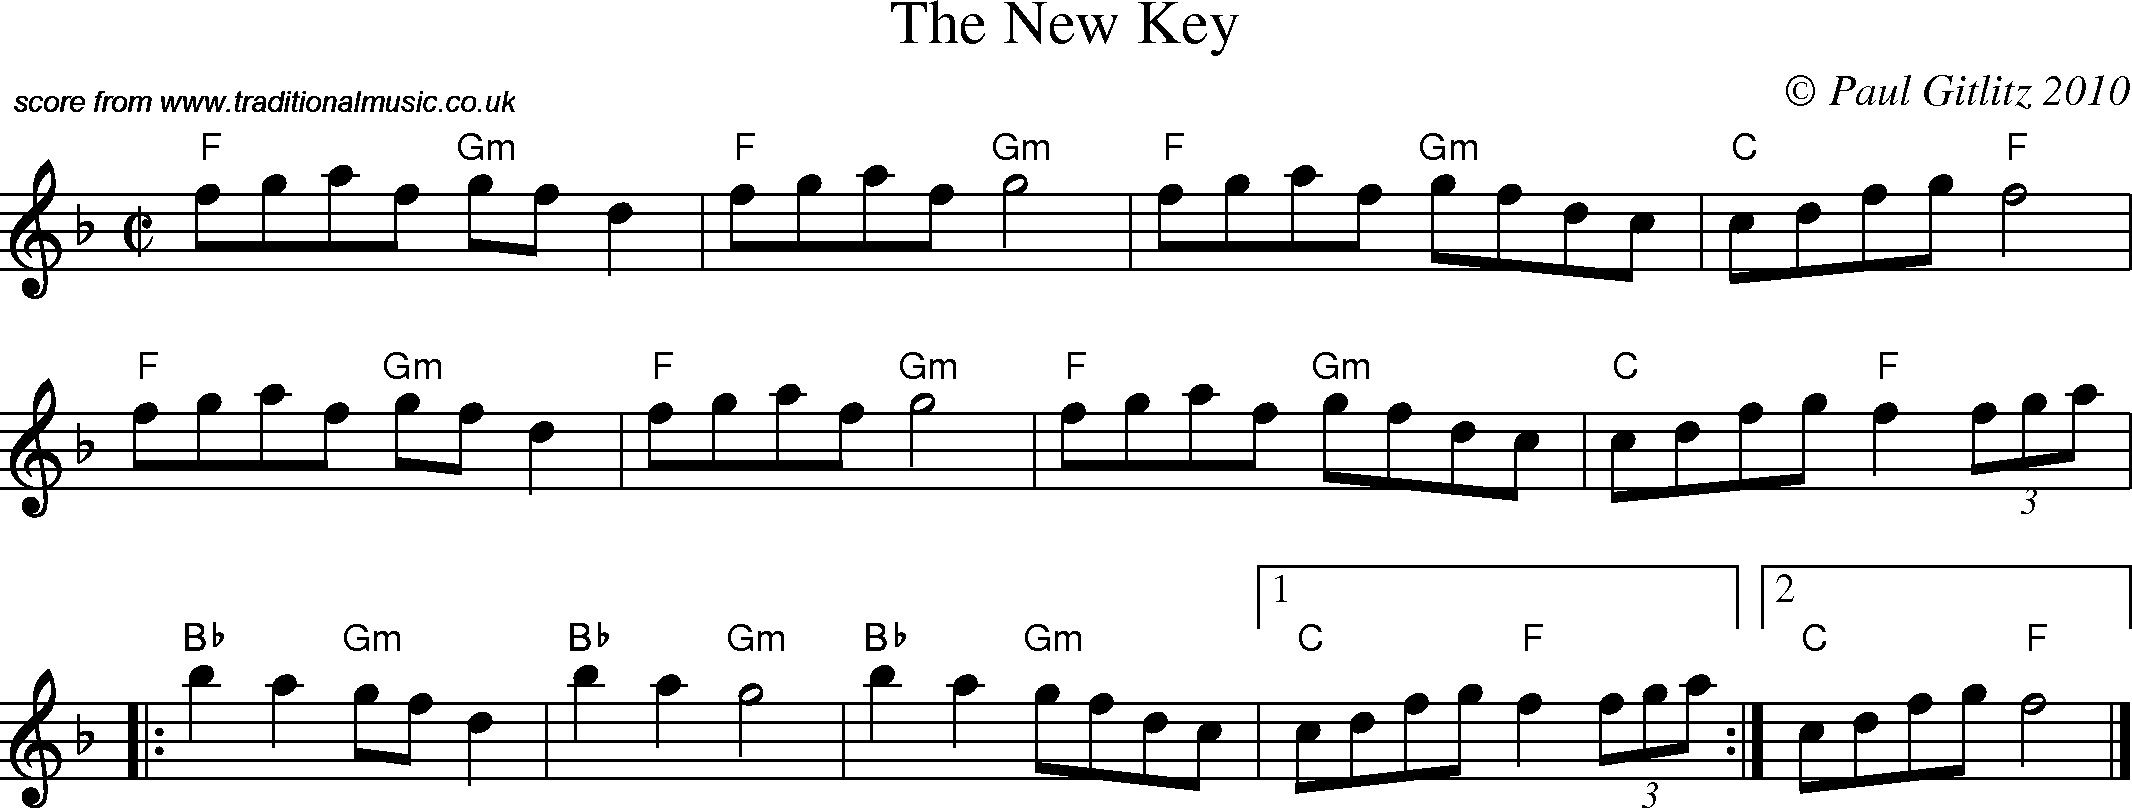 Sheet Music Score for Reel - New Key, The